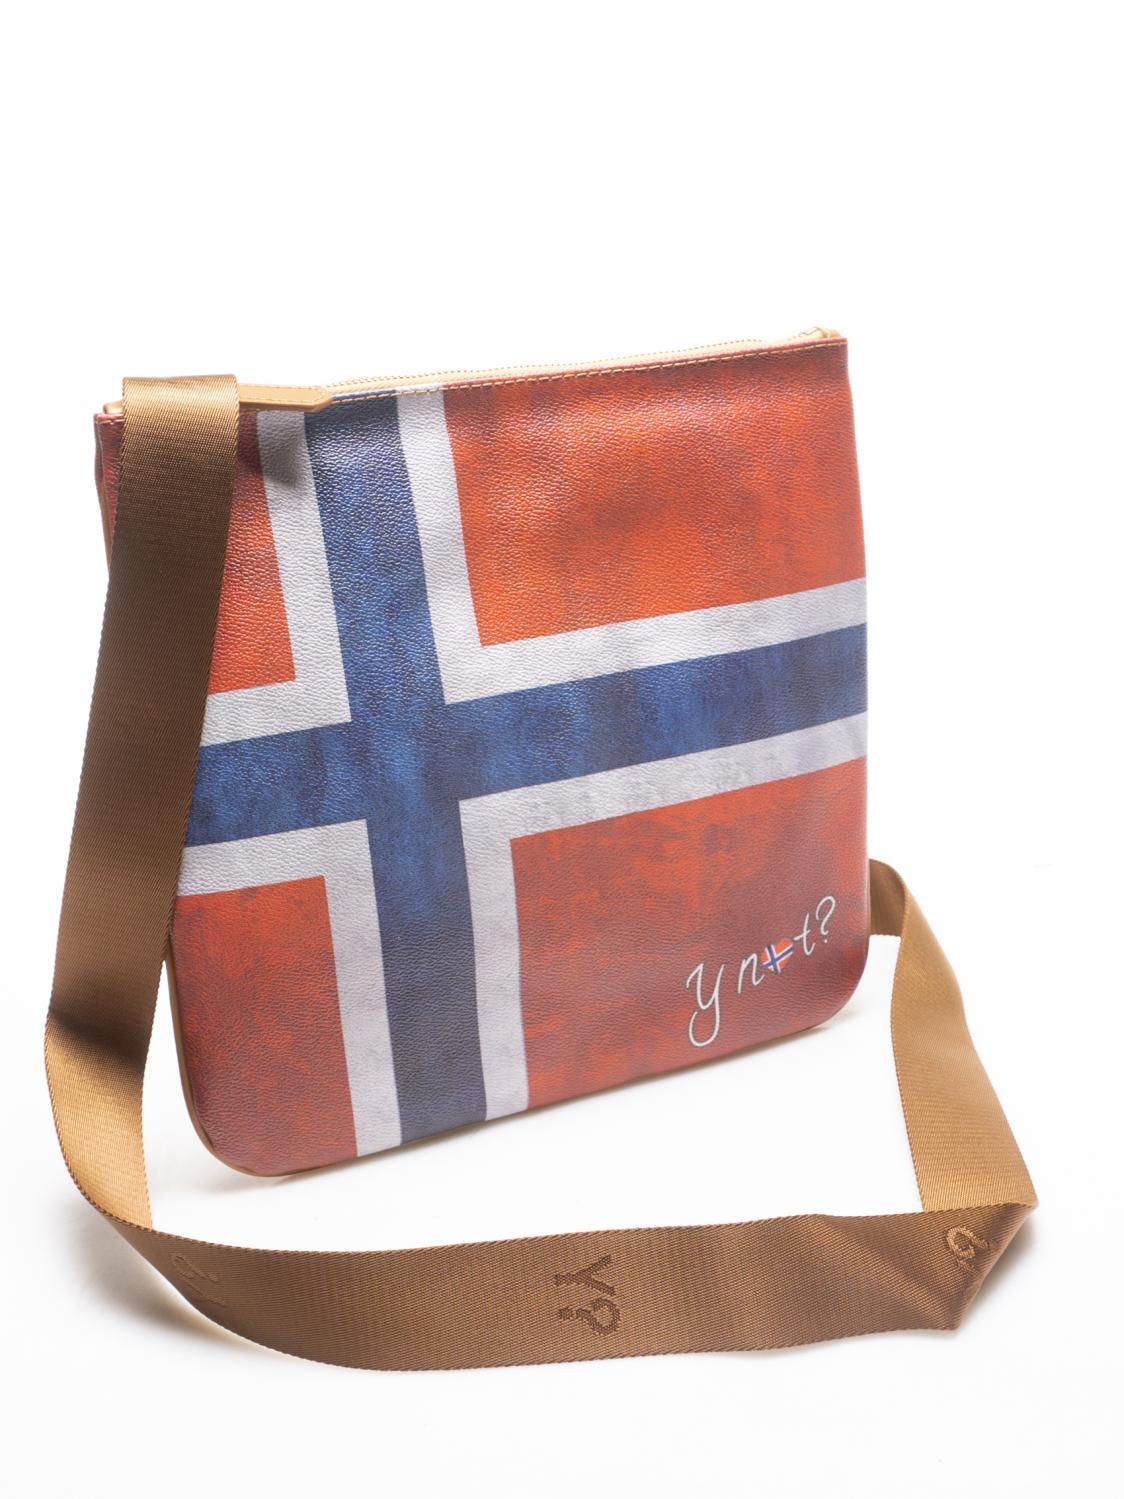 90s Braccialini Pochette/zipper Pouch Design/brown Bag -  Norway